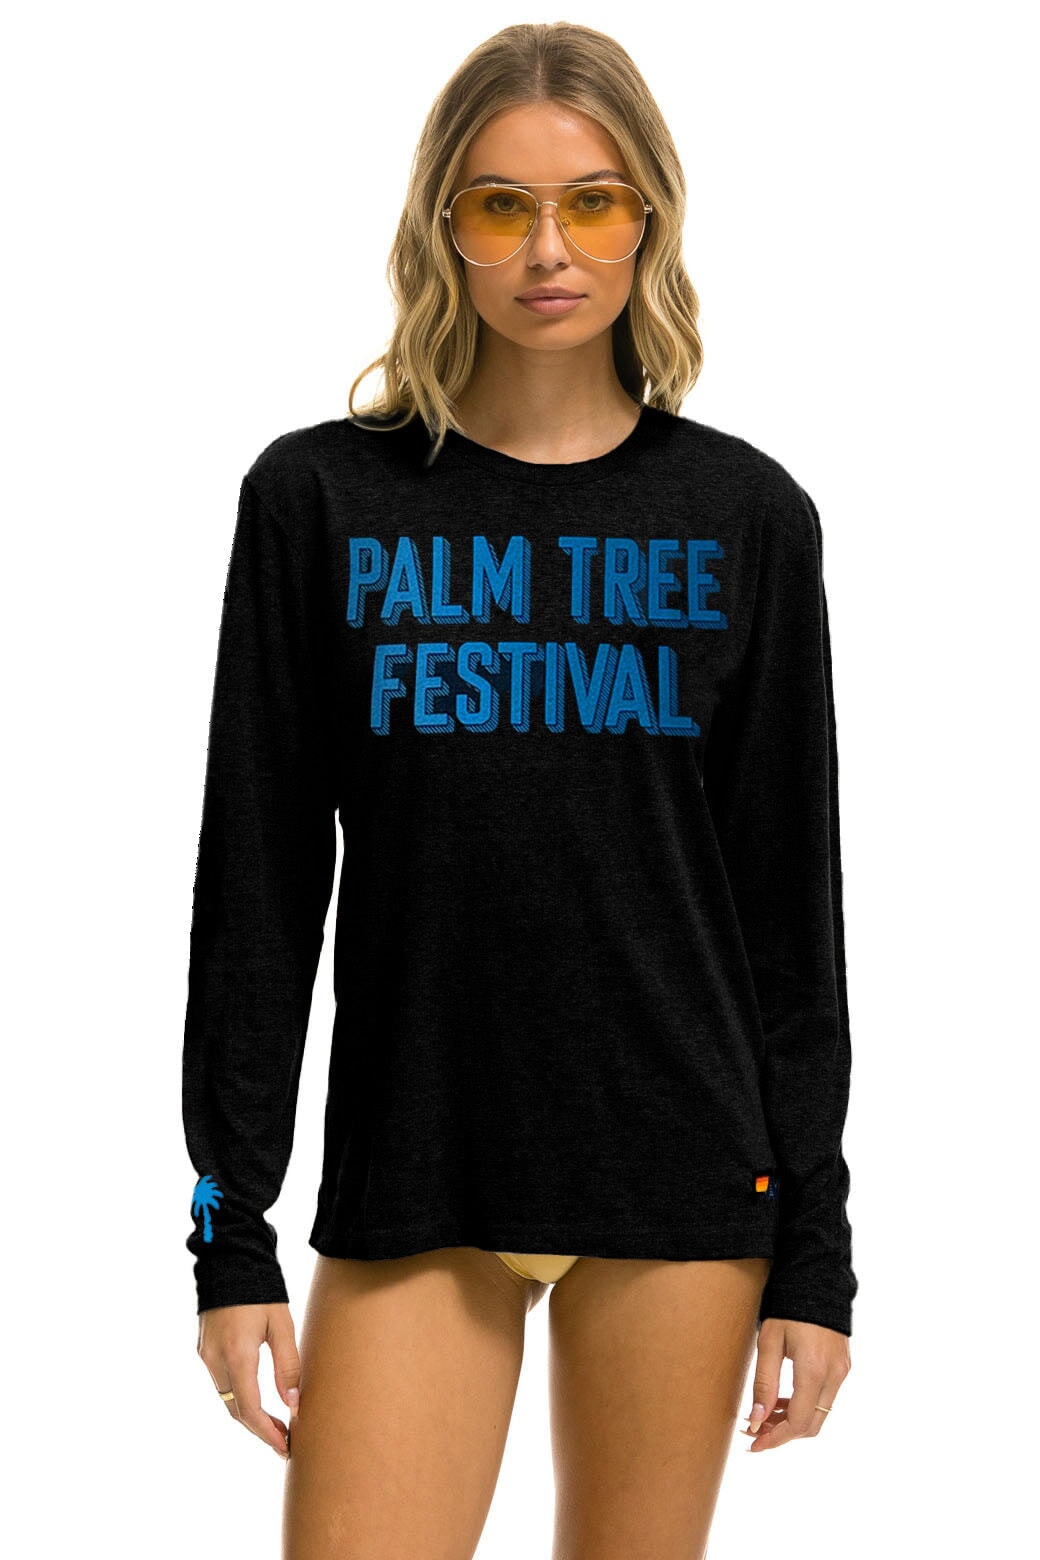 PALM TREE FESTIVAL ASPEN 2023 LONG SLEEVE TEE - BLACK - Aviator Nation